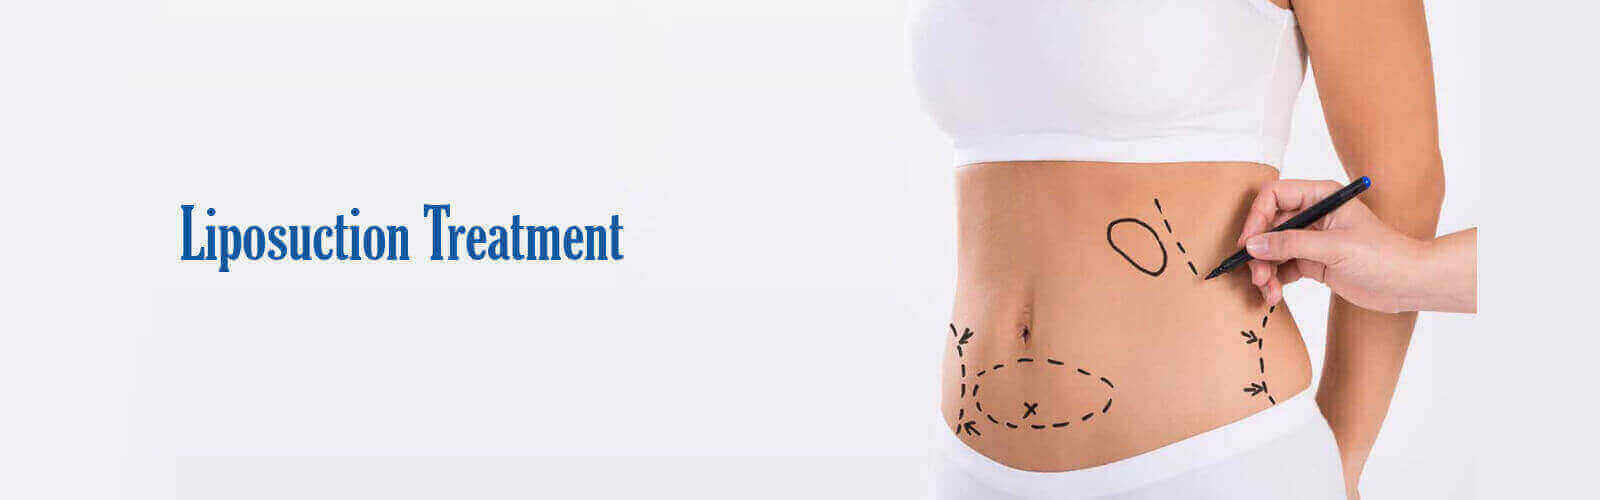 Liposuction Treatment in New Zealand